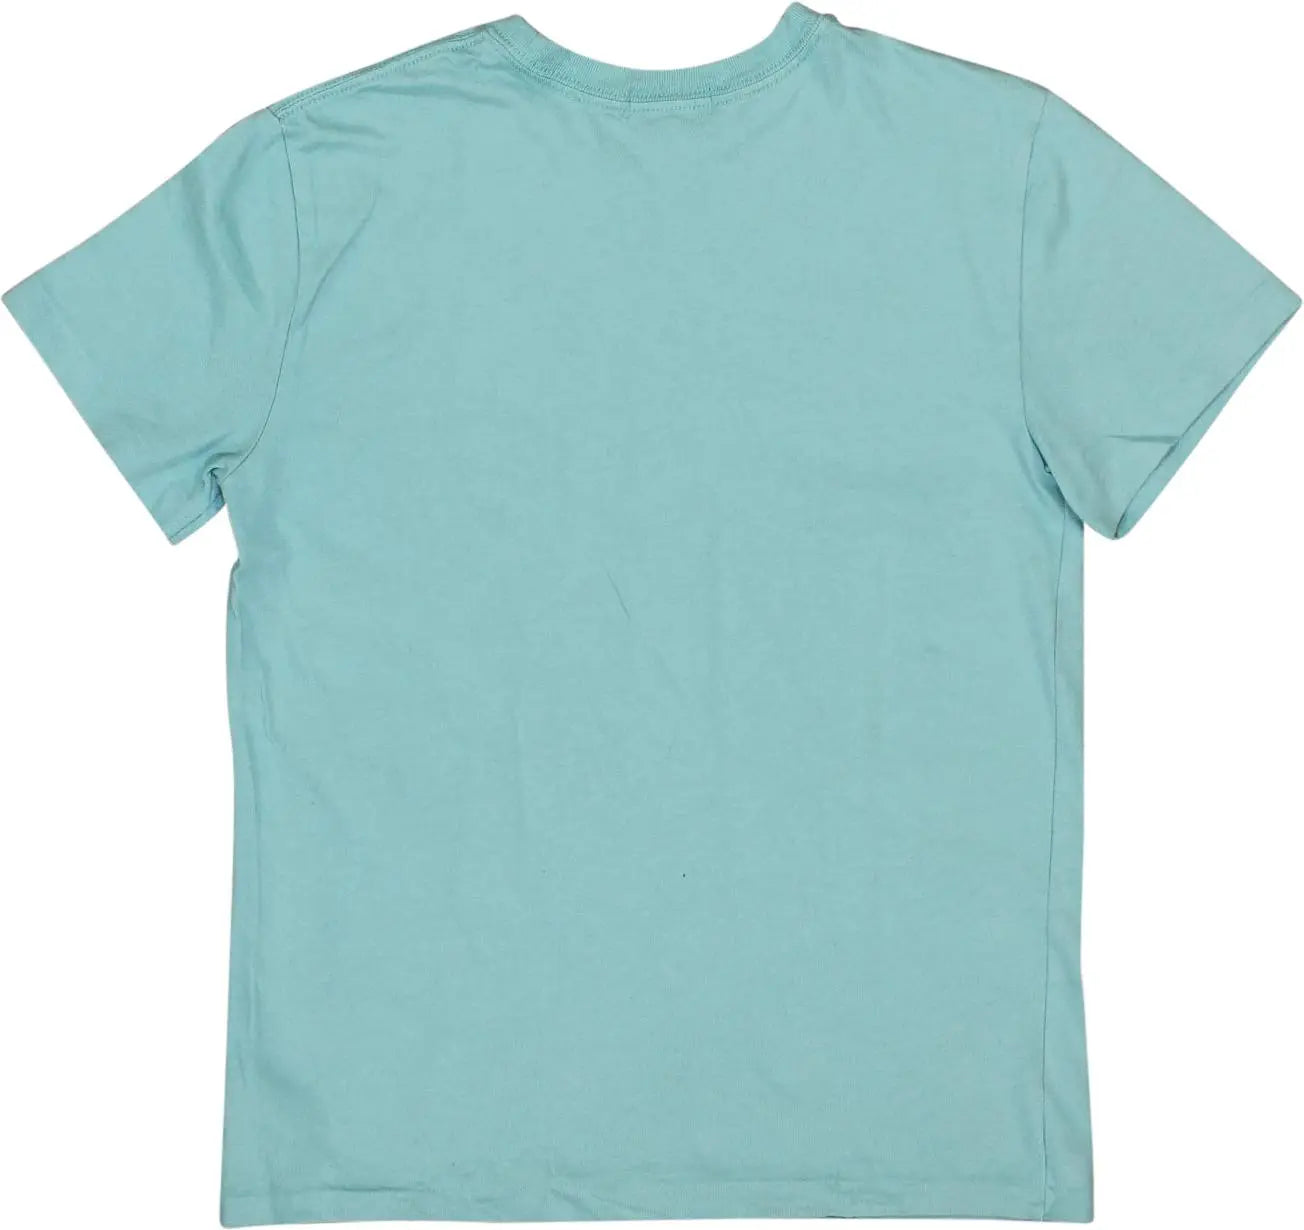 Ralph Lauren - Blue T-shirt by Ralph Lauren- ThriftTale.com - Vintage and second handclothing